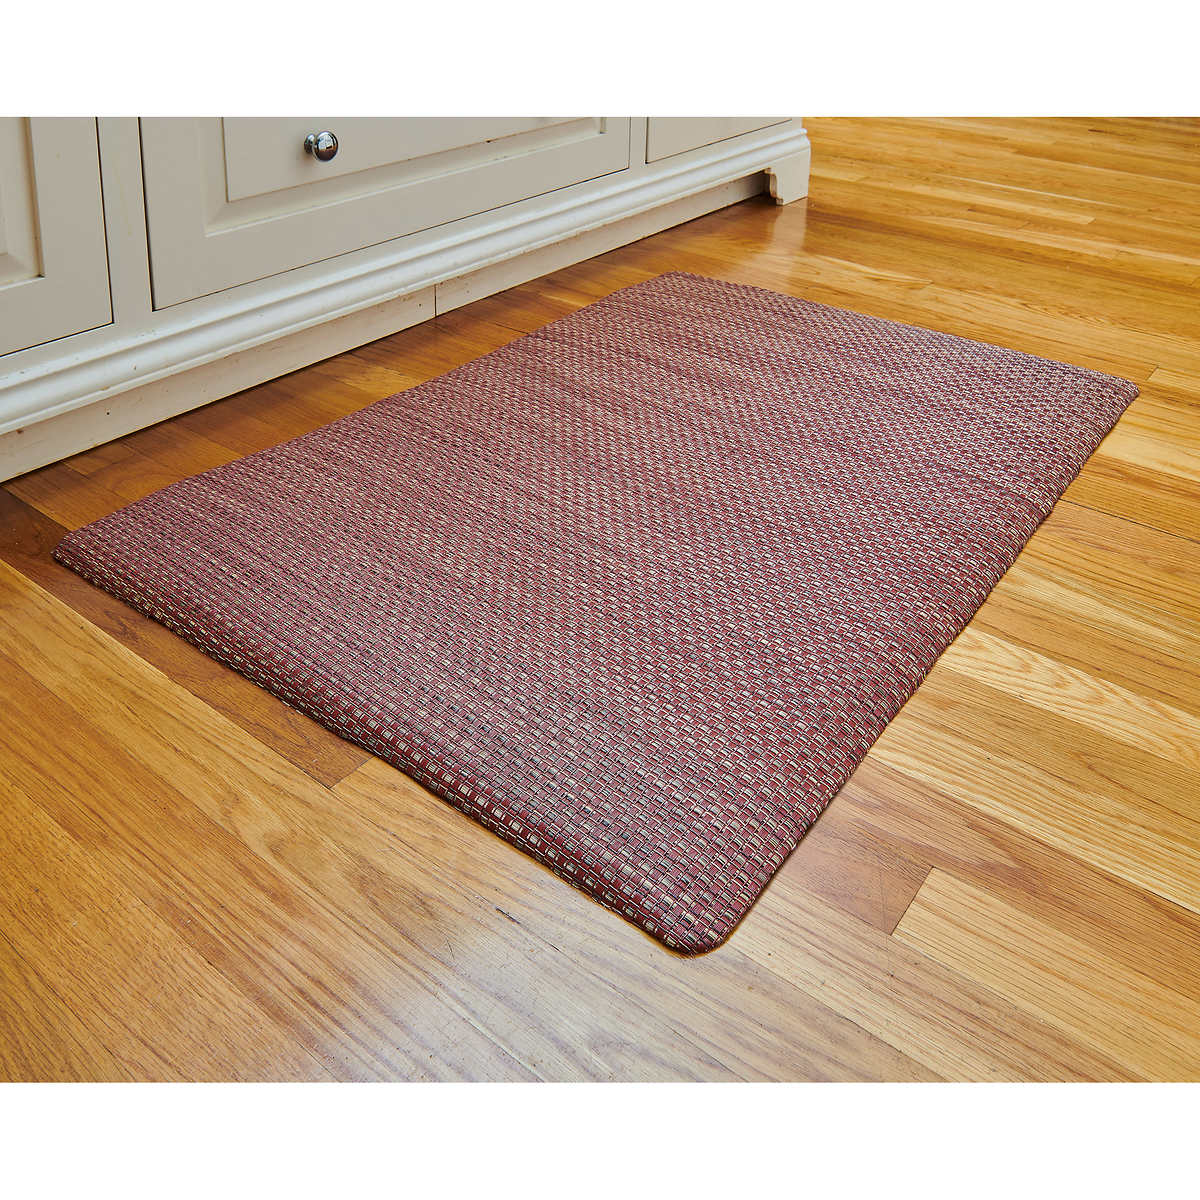 Chicken Print Kitchen Mat For Floor Anti-slip Hallway Balcony Rugs